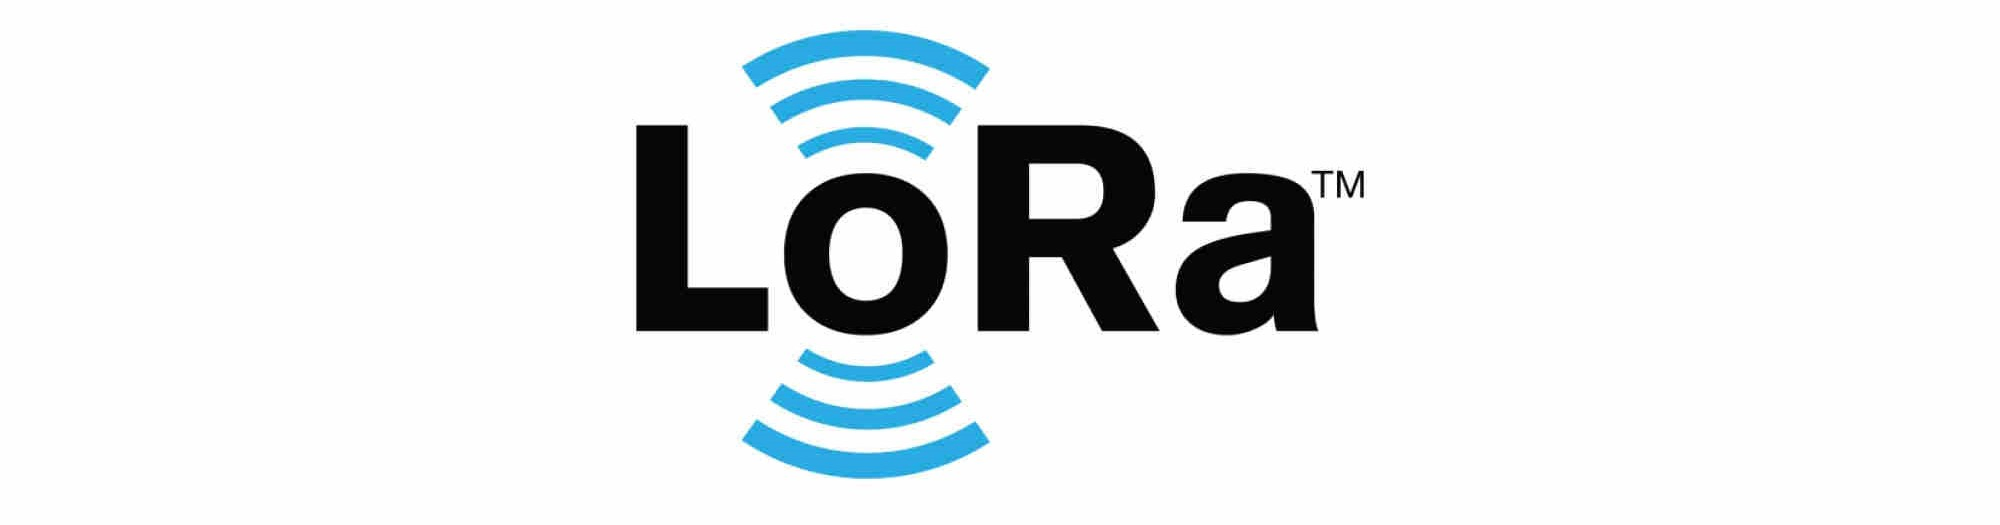 Logo LoraWan